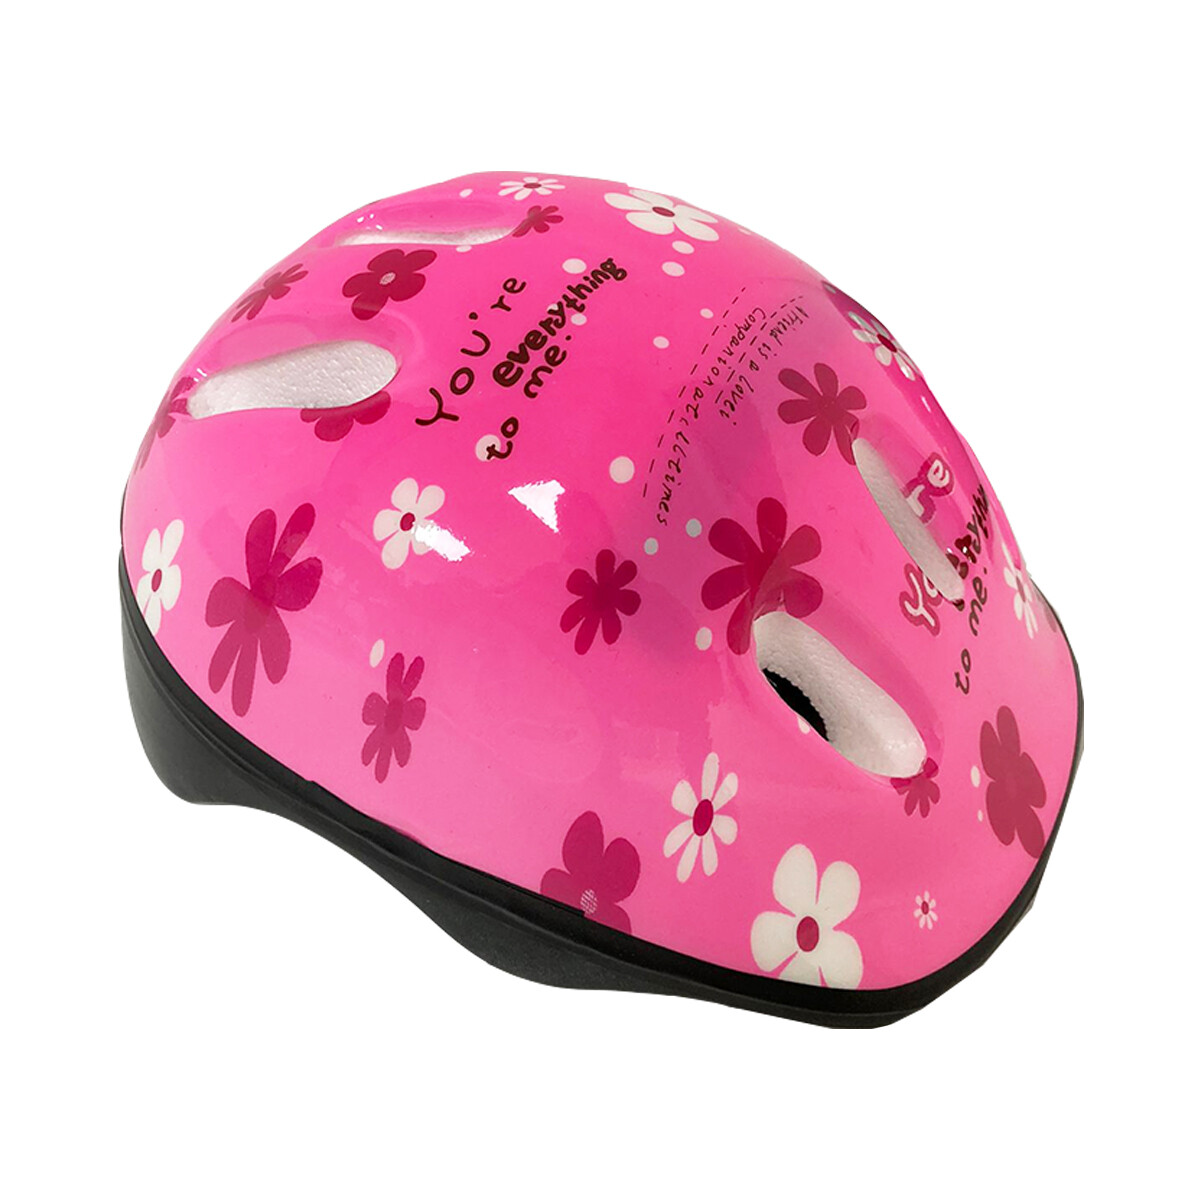 Casco Infantil Para Bici/roller/skate Rosa con flores - 001 